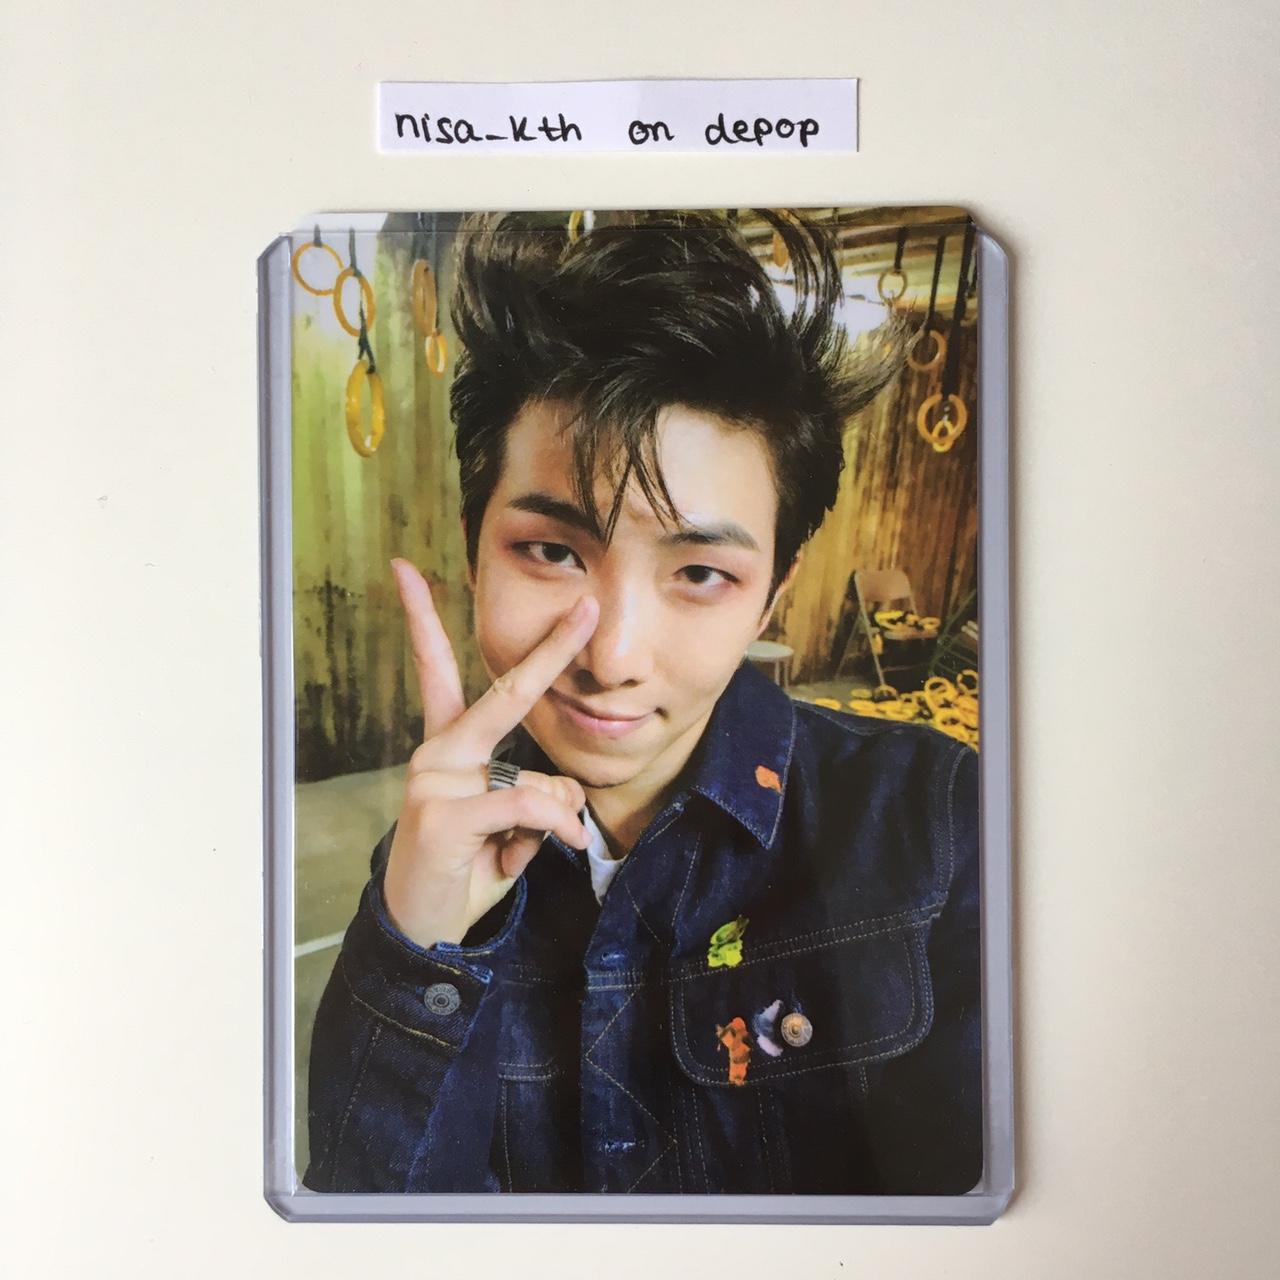 BTS RM Merch Box 5 Photocard W/ surprise freebie - Depop